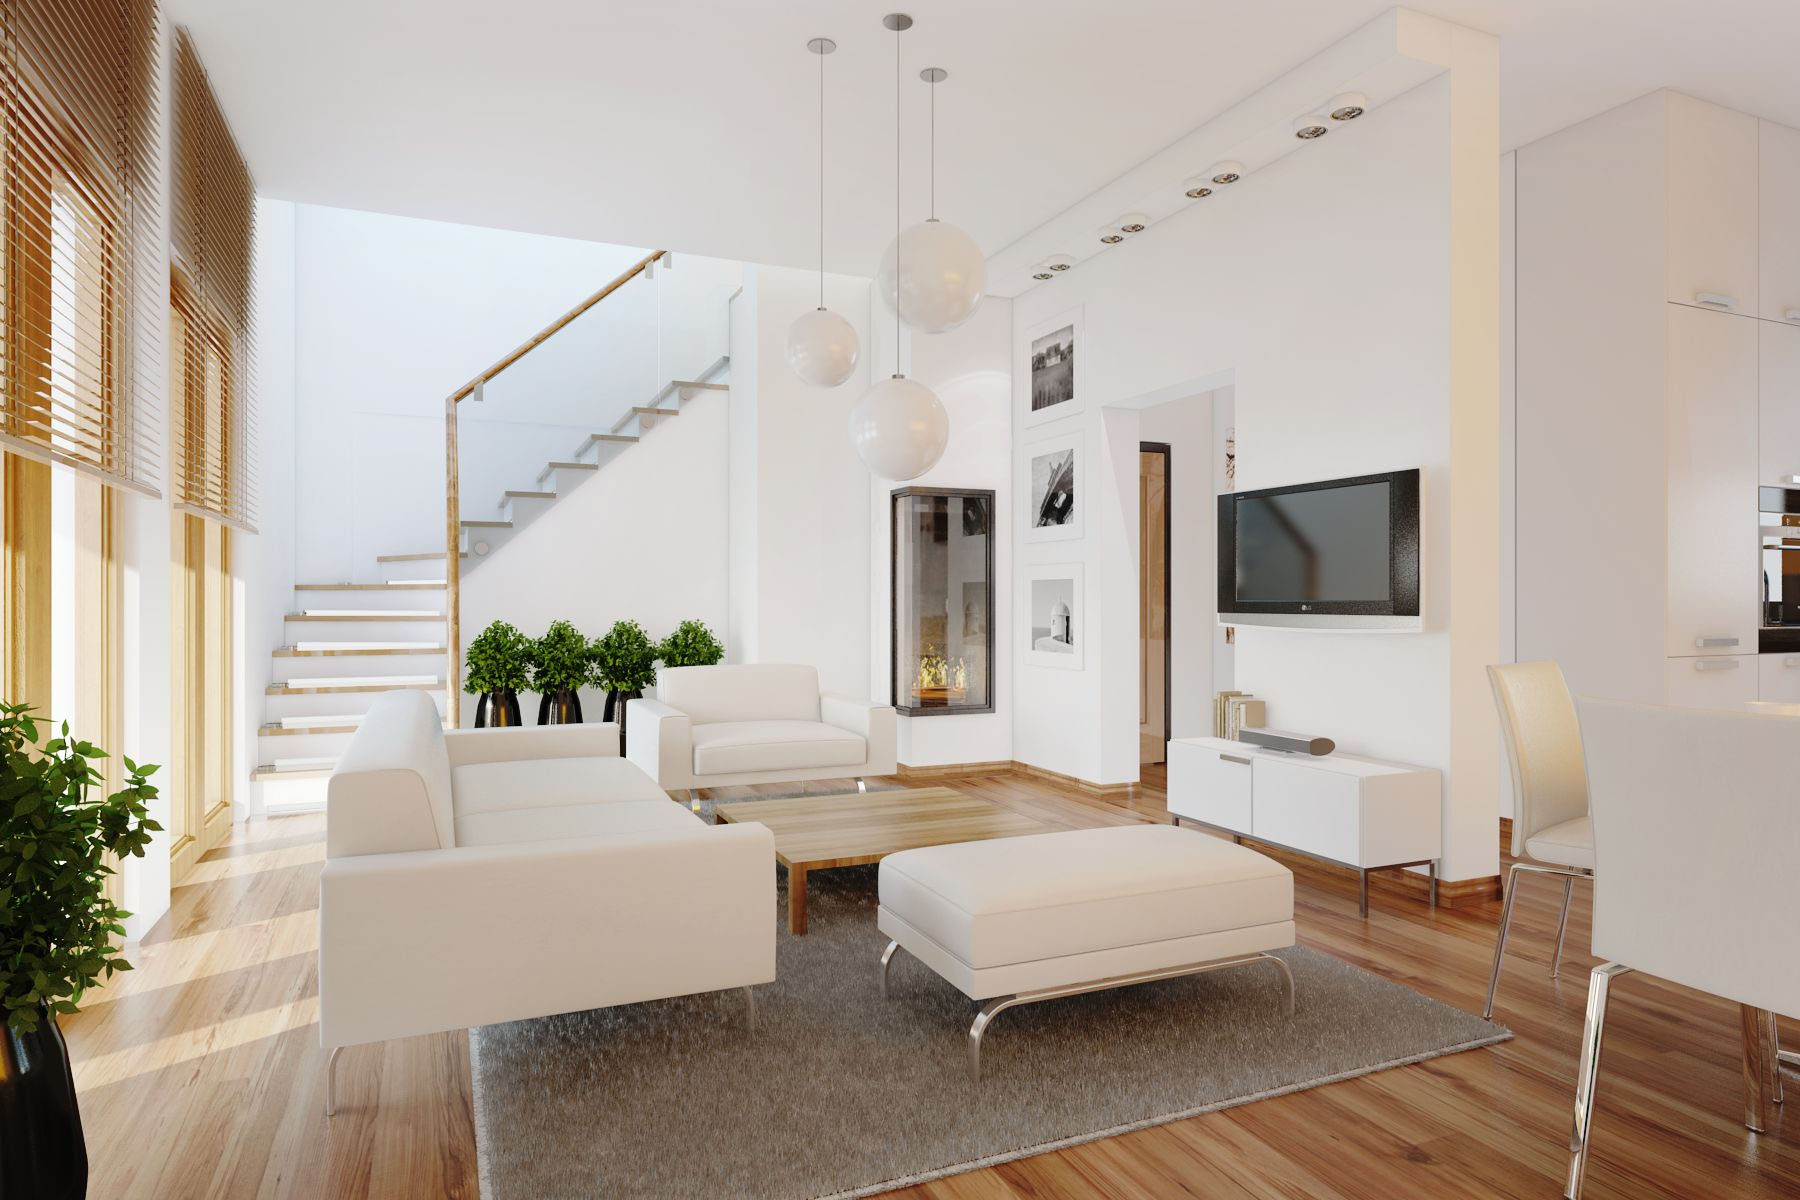 12 Contoh Dekorasi Ruang Tamu Minimalis Moden & Sederhana Dengan